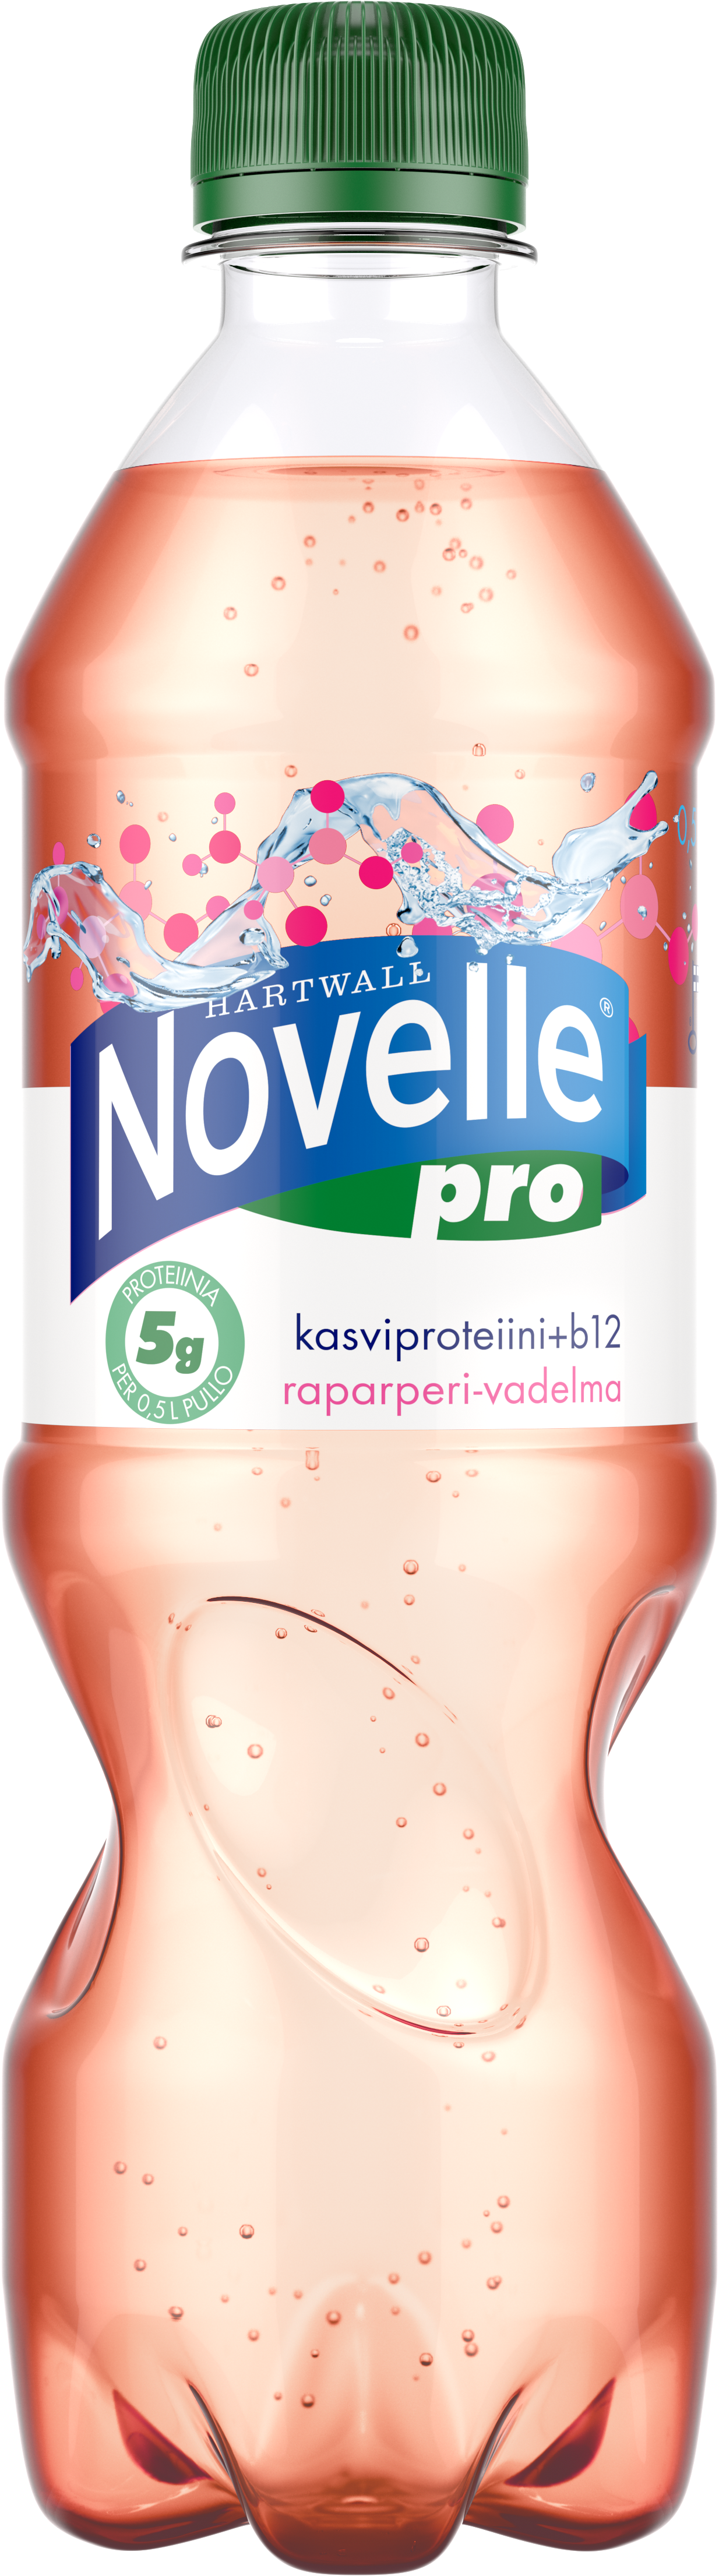 Novelle Pro raparperi-vadelma |